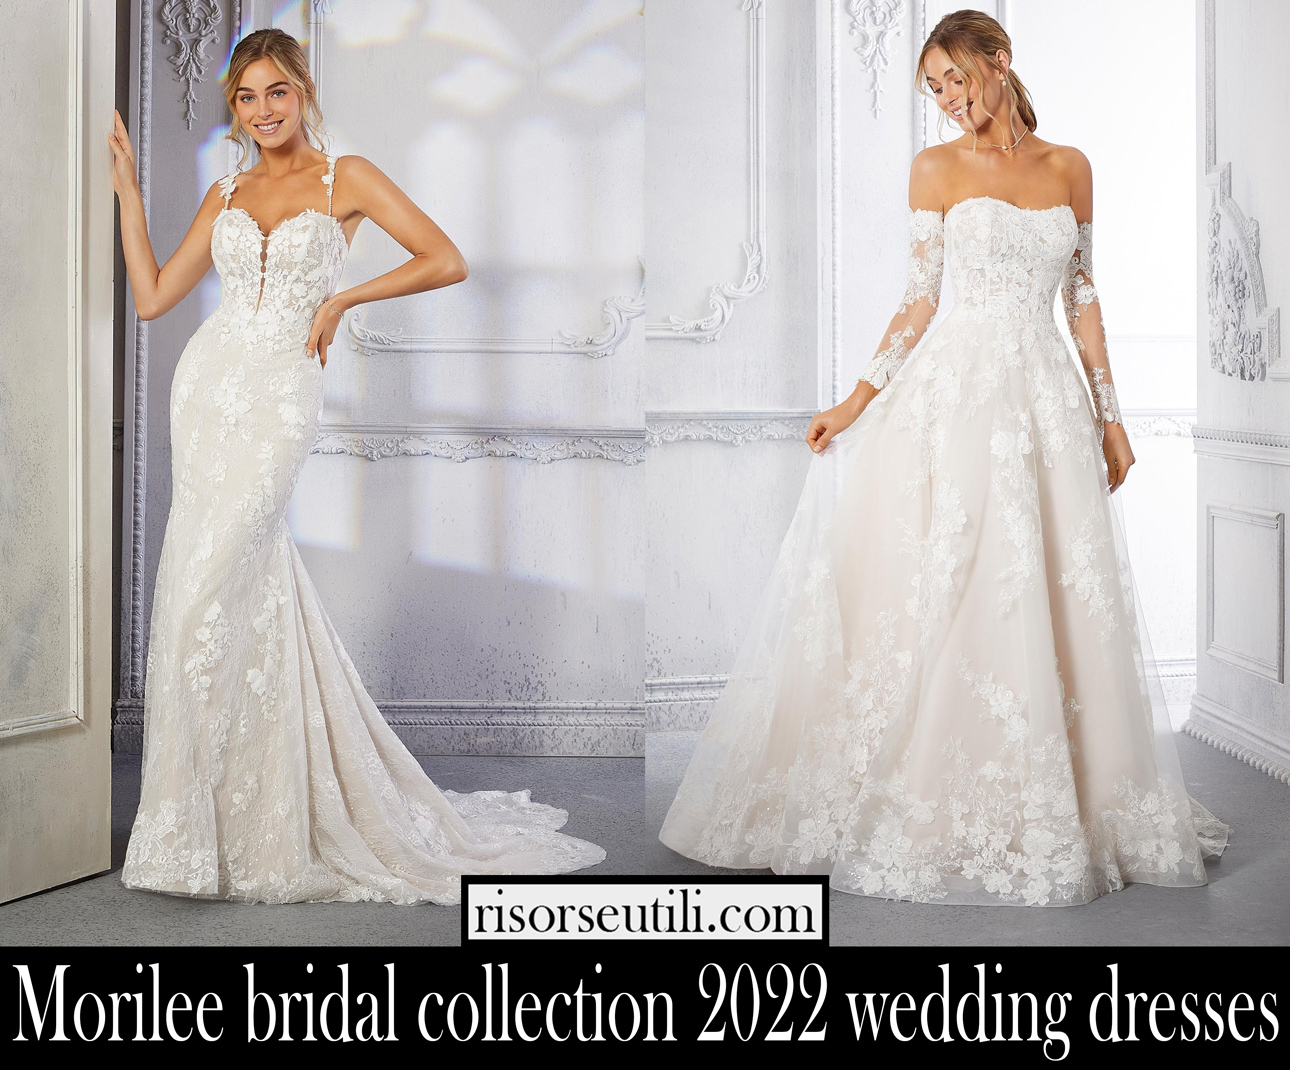 Morilee bridal collection 2022 wedding dresses